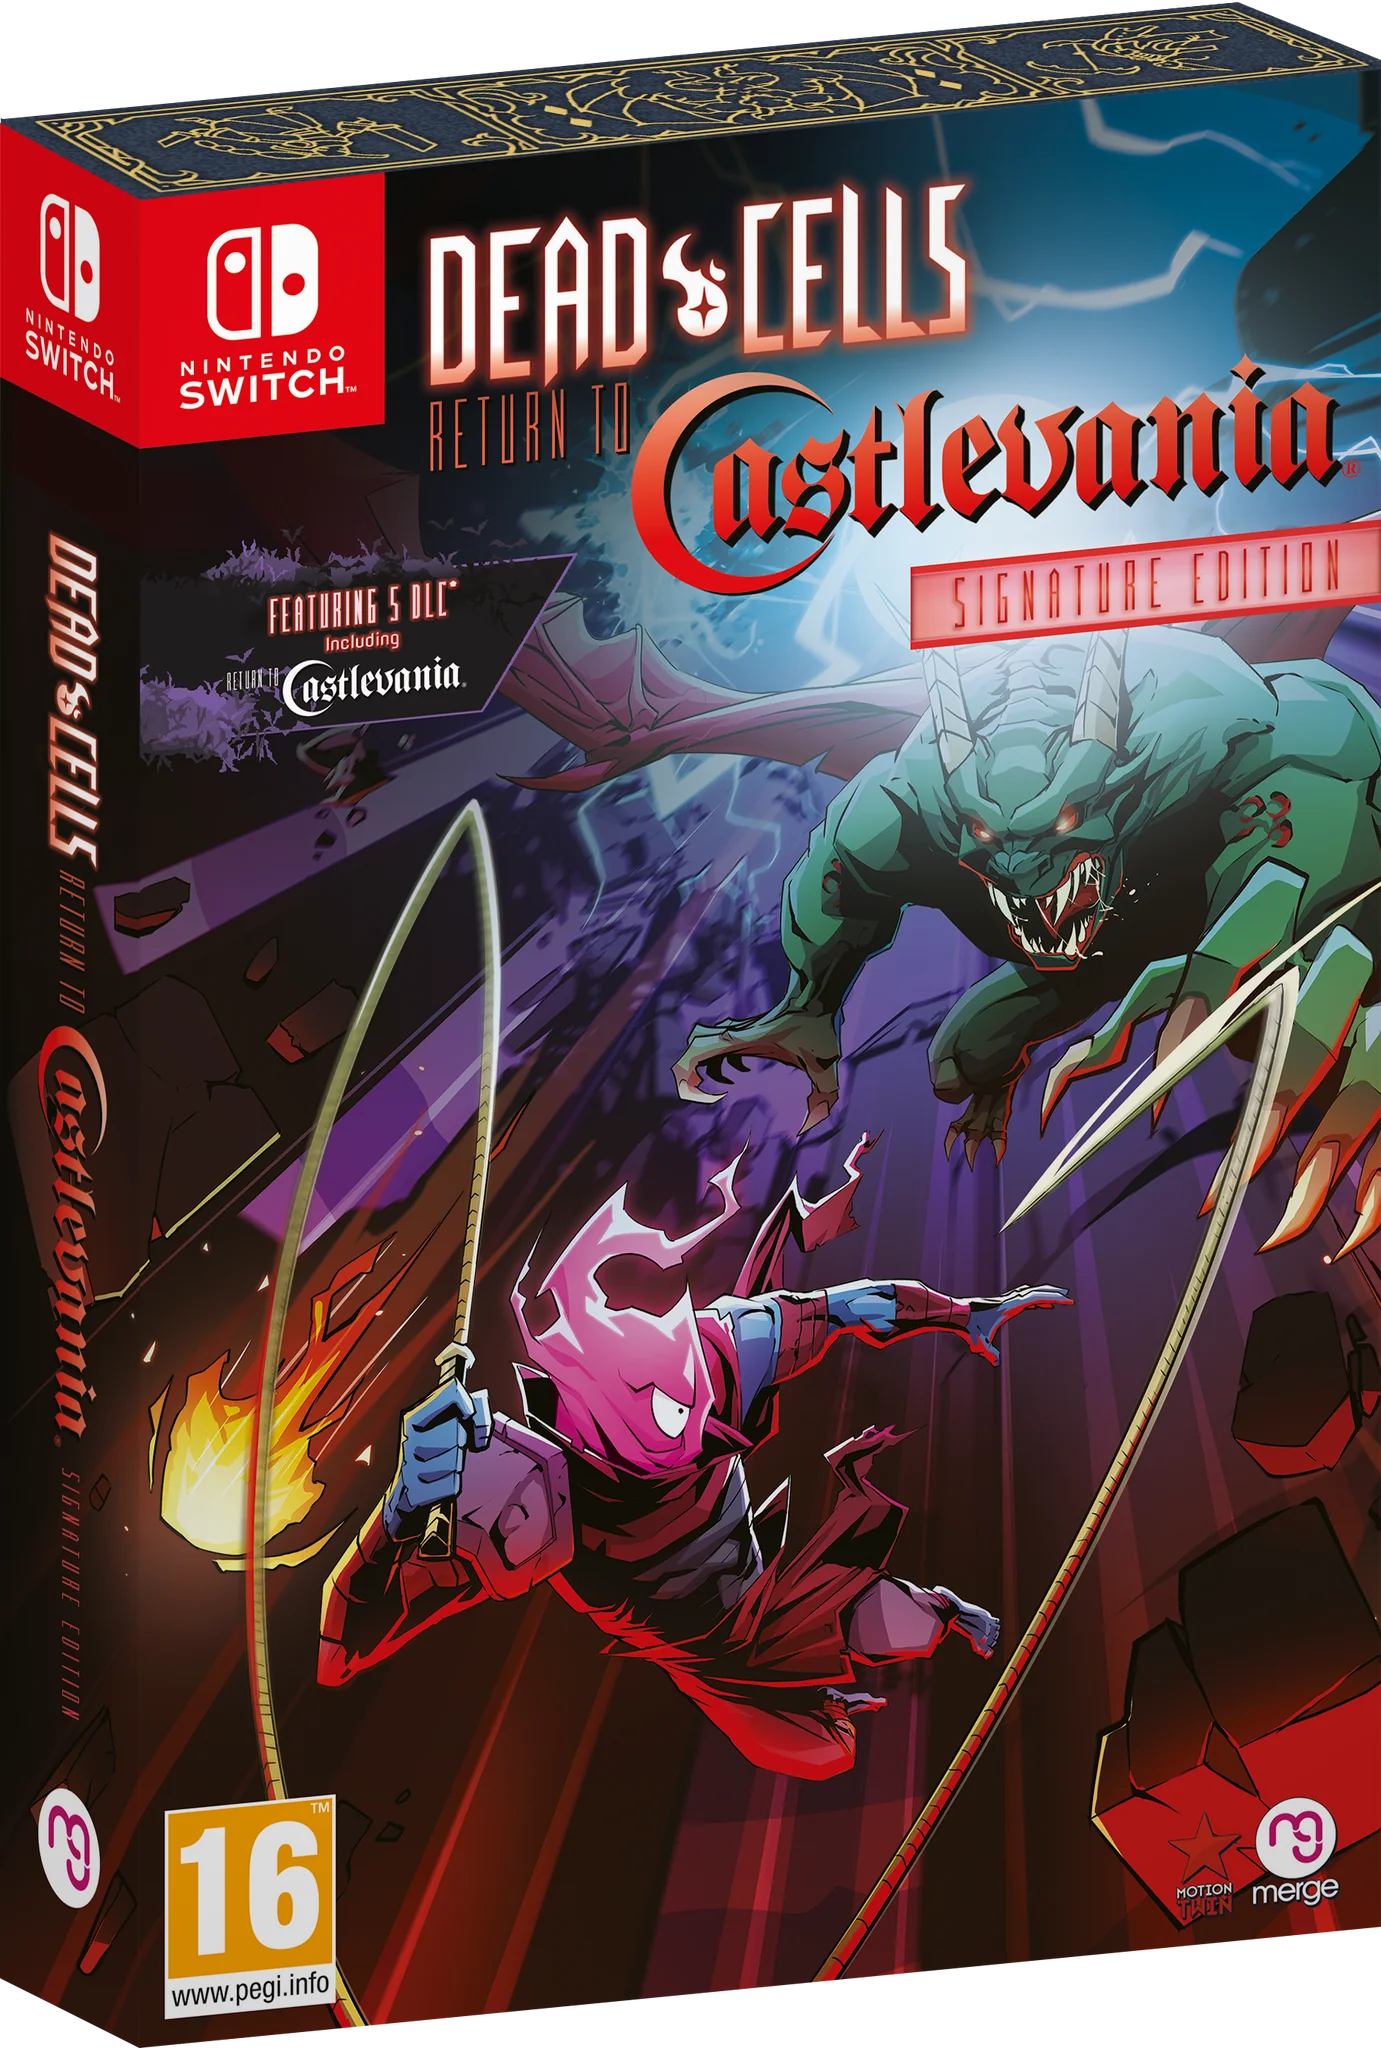 Dead Cells: Return to Castlevania - Signature Edition (Sw)